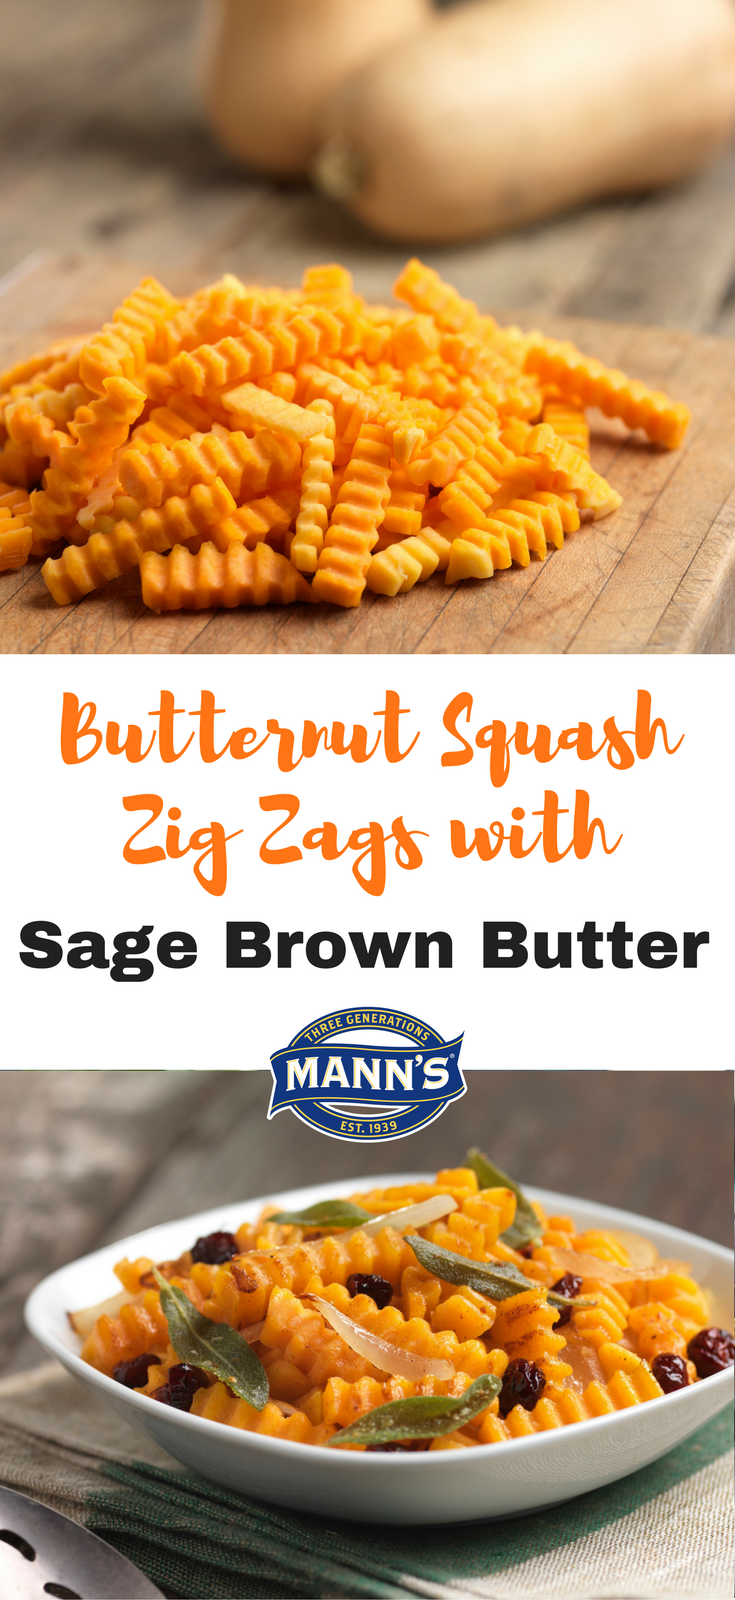 Mann's Butternut Squash with Sage Brown Butter